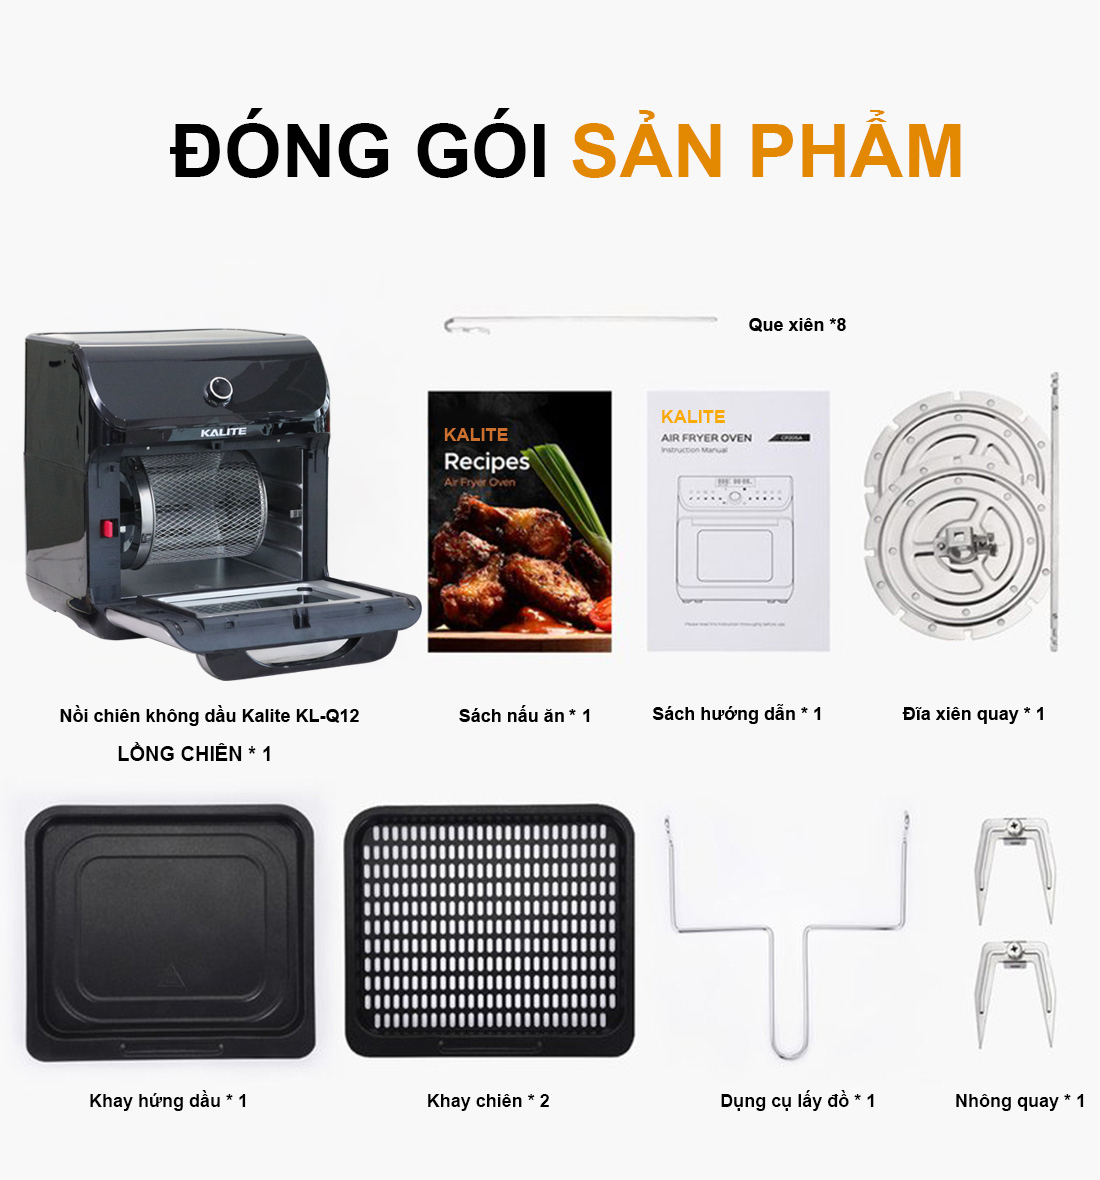 dong-goi-san-pham-noi-chien-khong-dau-kalite-kl-q12